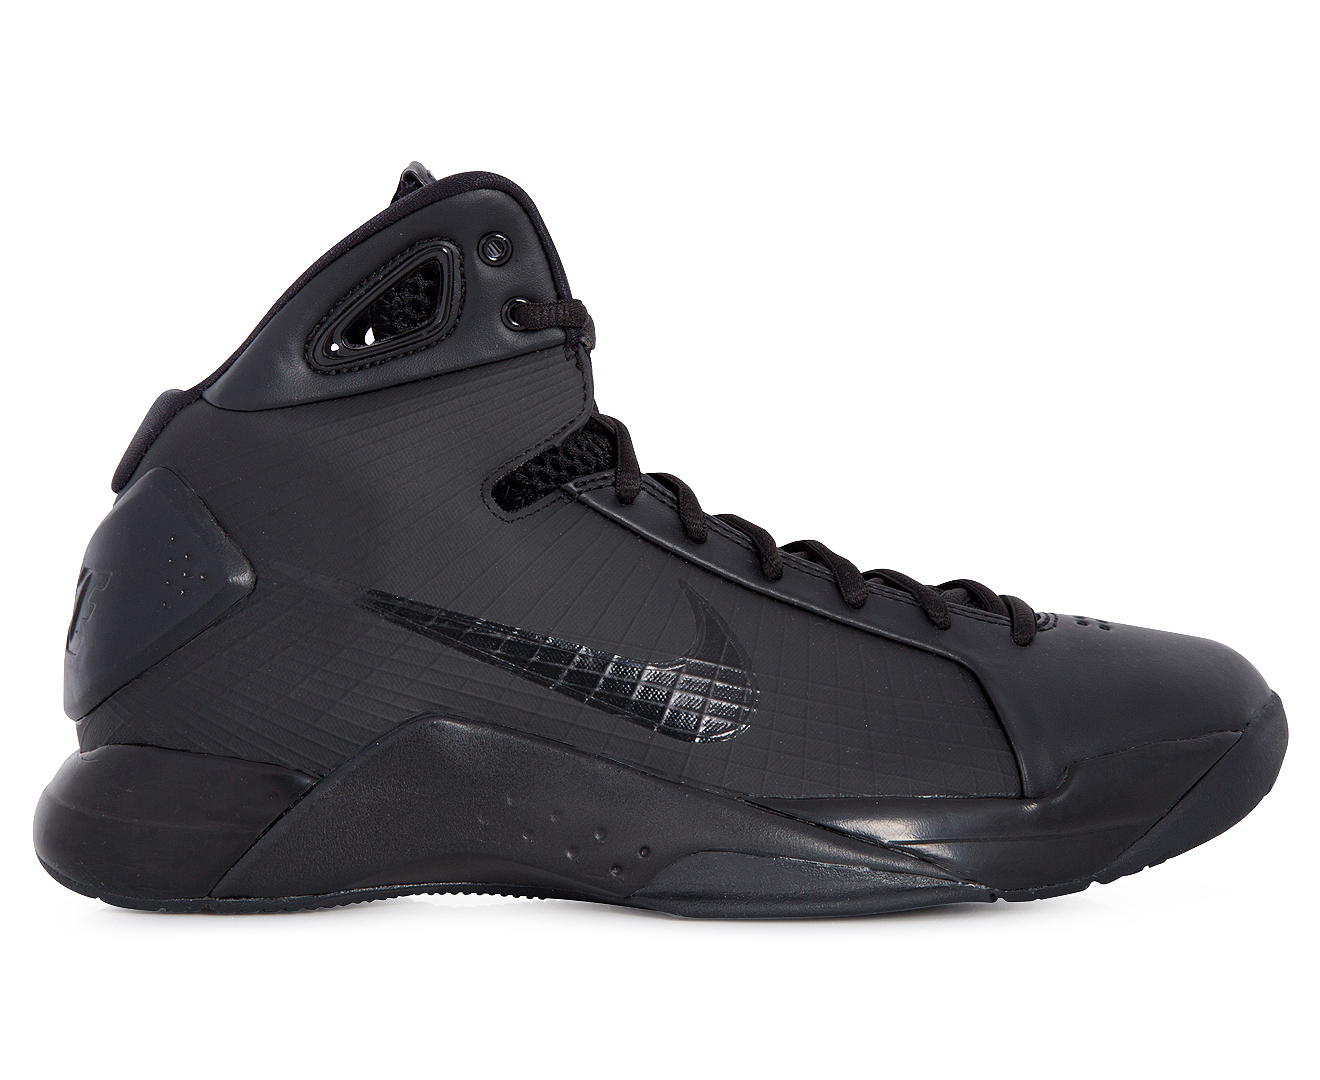 Nike Men's Hyperdunk 08 Basketball Shoe - Black